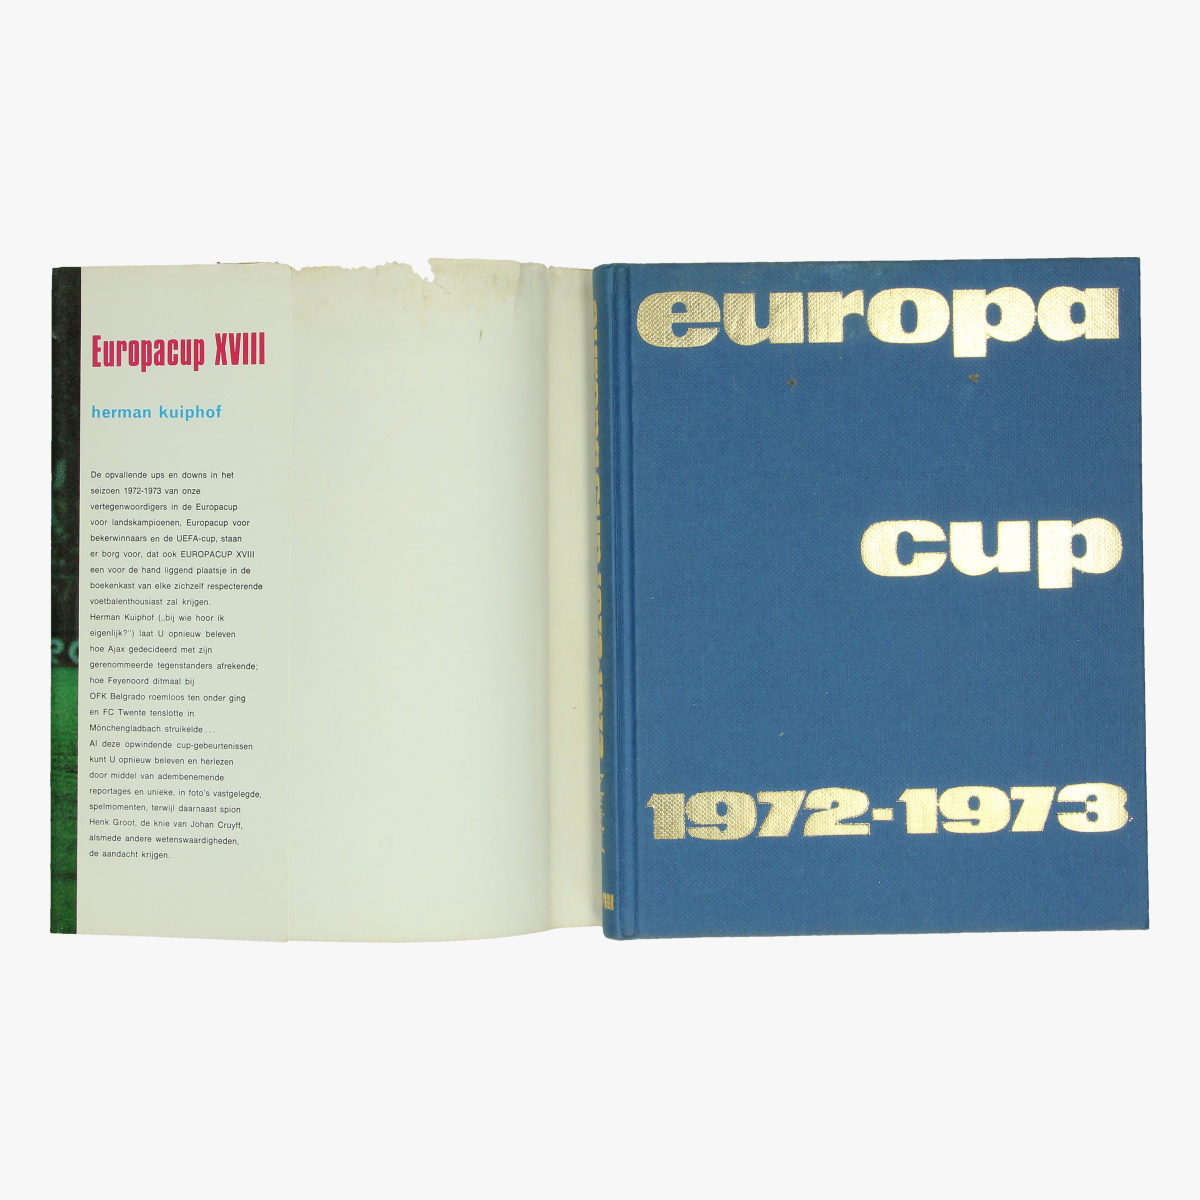 Afbeeldingen van boek voetbal europacup XVIII herman kuiphof 1972/73 uitgeverij luitingh - laren n.h